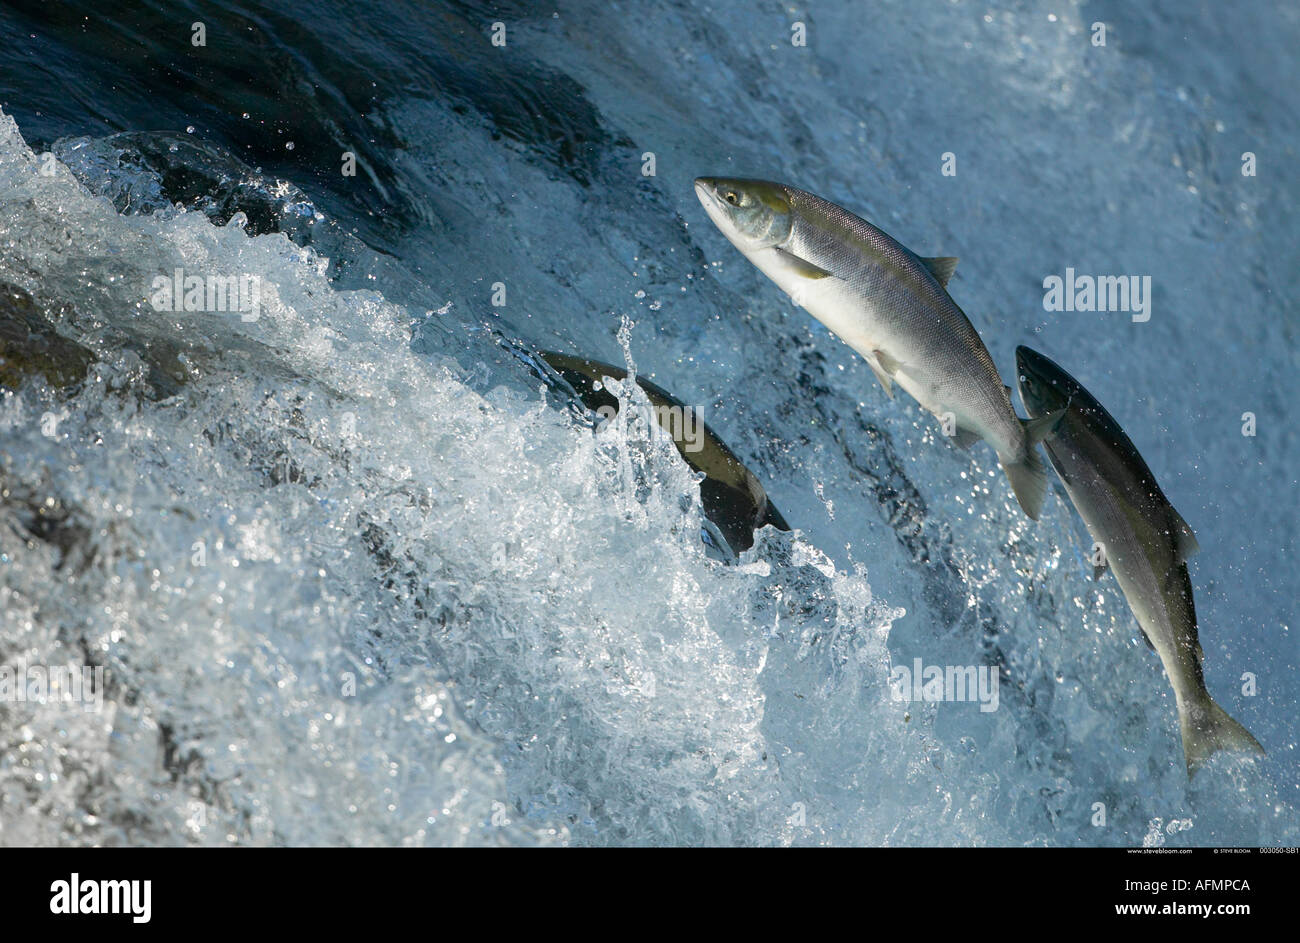 salmon-swimming-up-waterfall-to-spawning